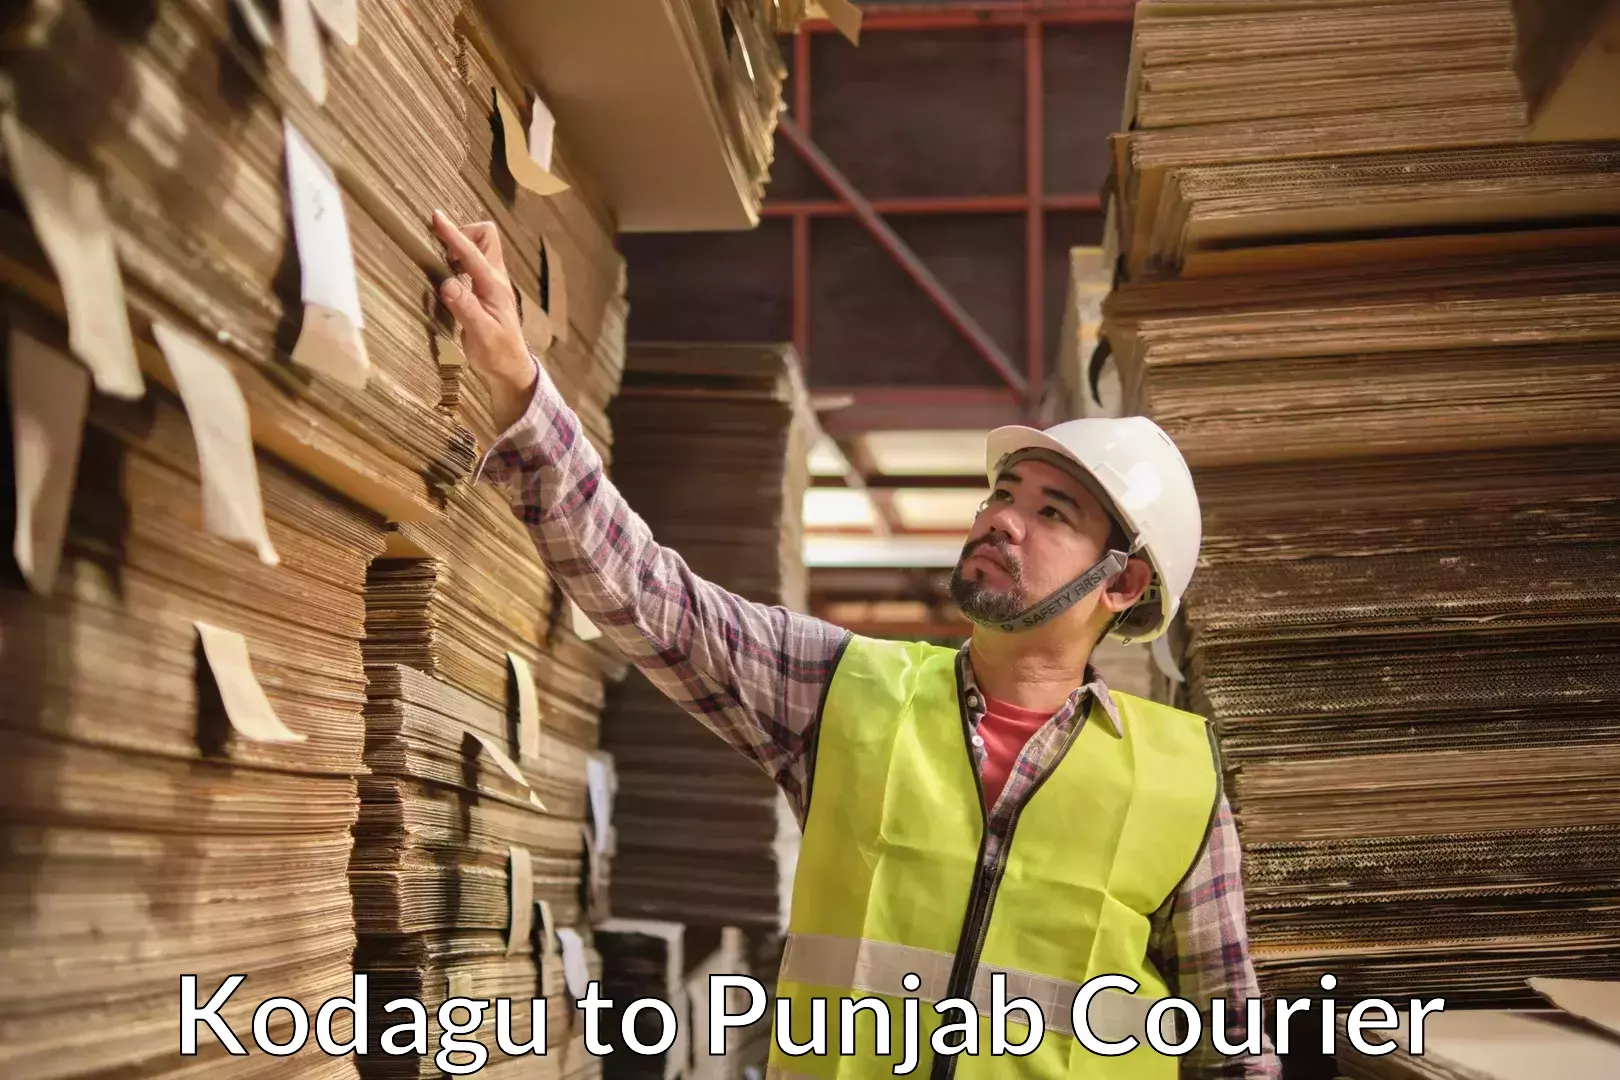 Trusted moving company Kodagu to Punjab